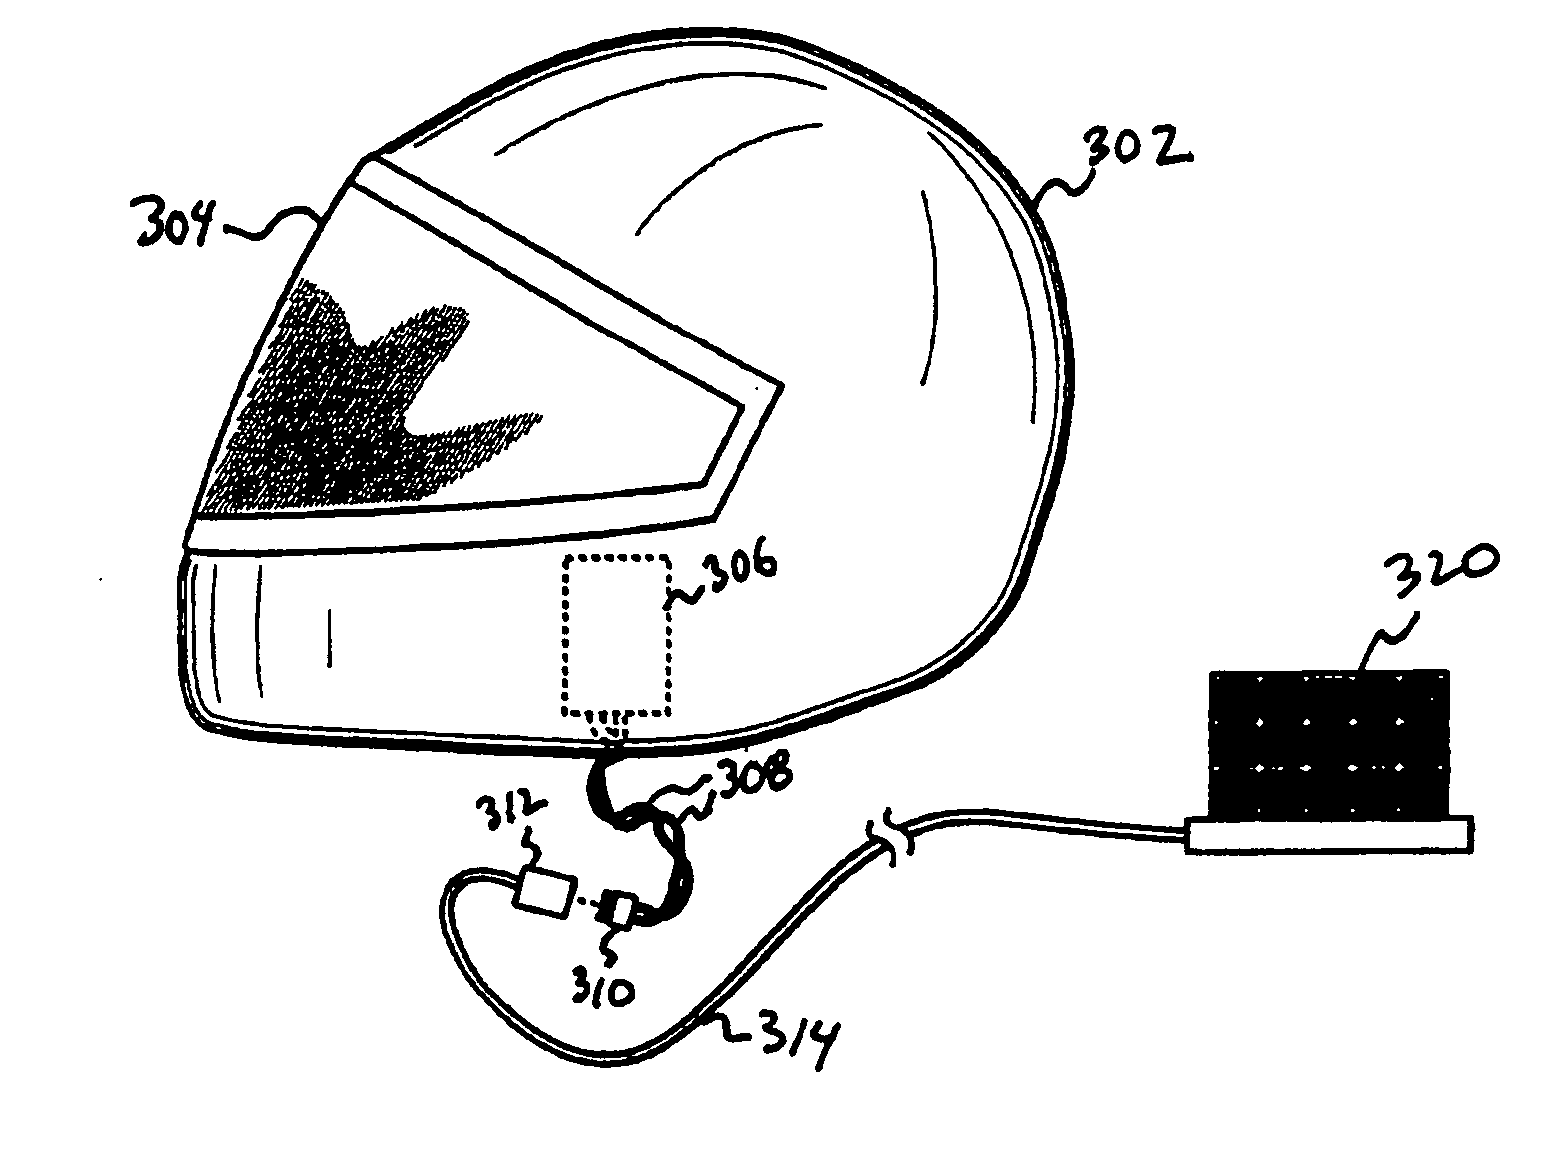 Electrical power system for crash helmets